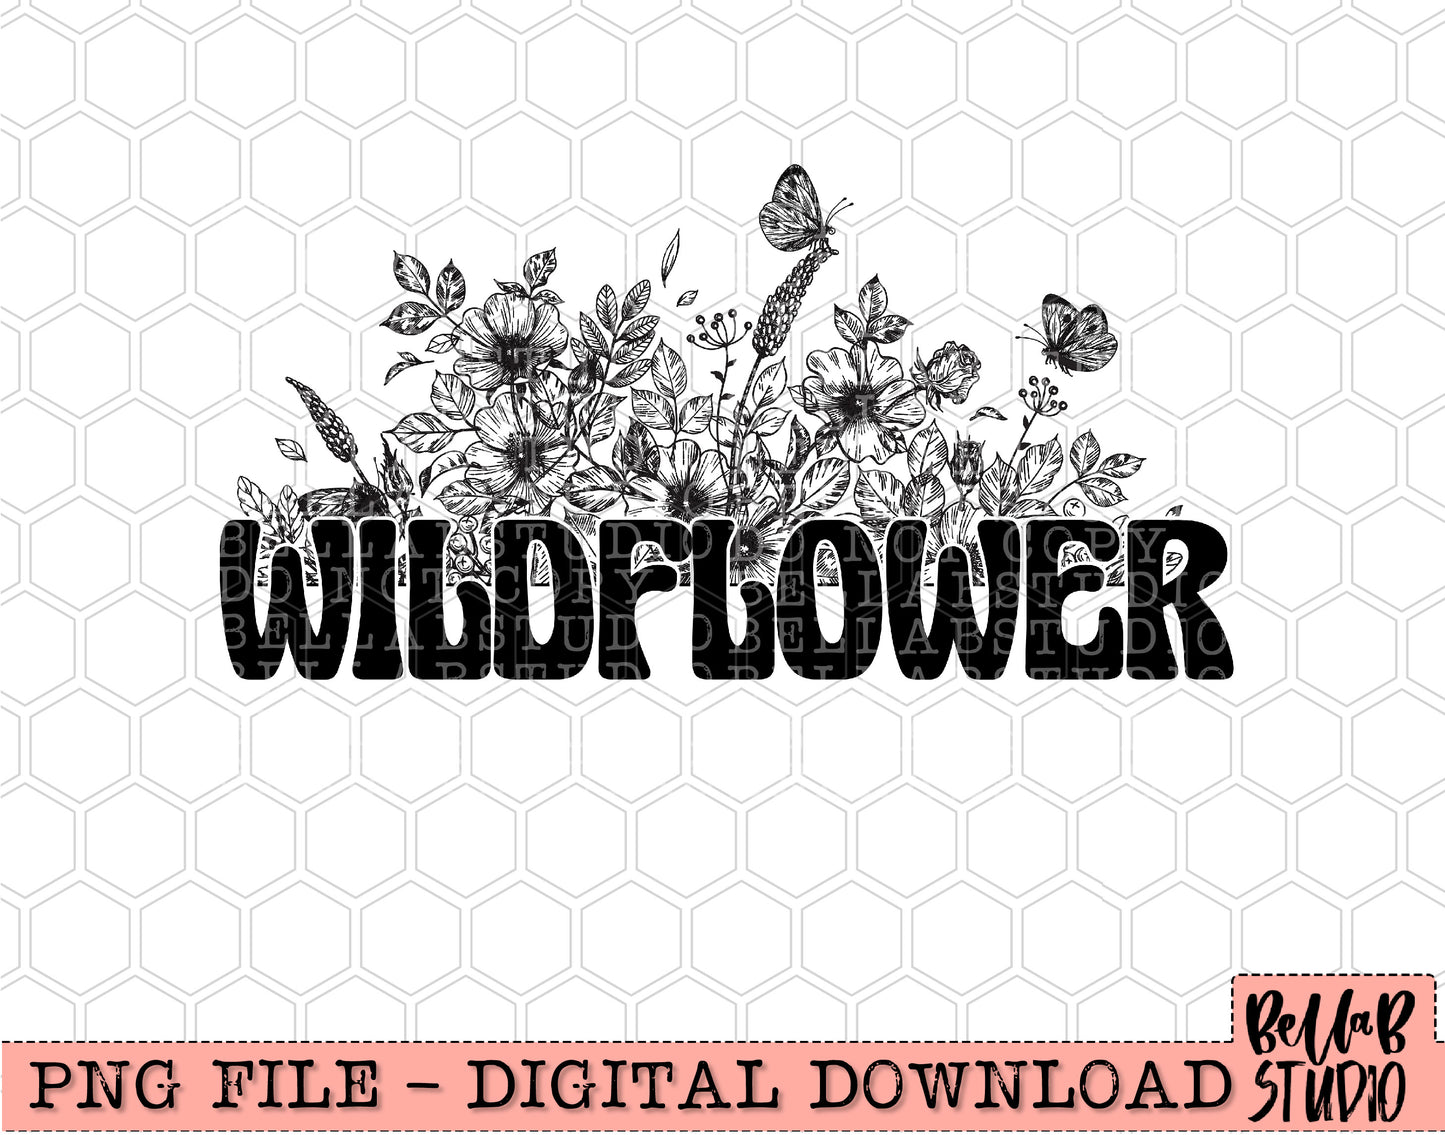 Matching Wildflower Sublimation Design